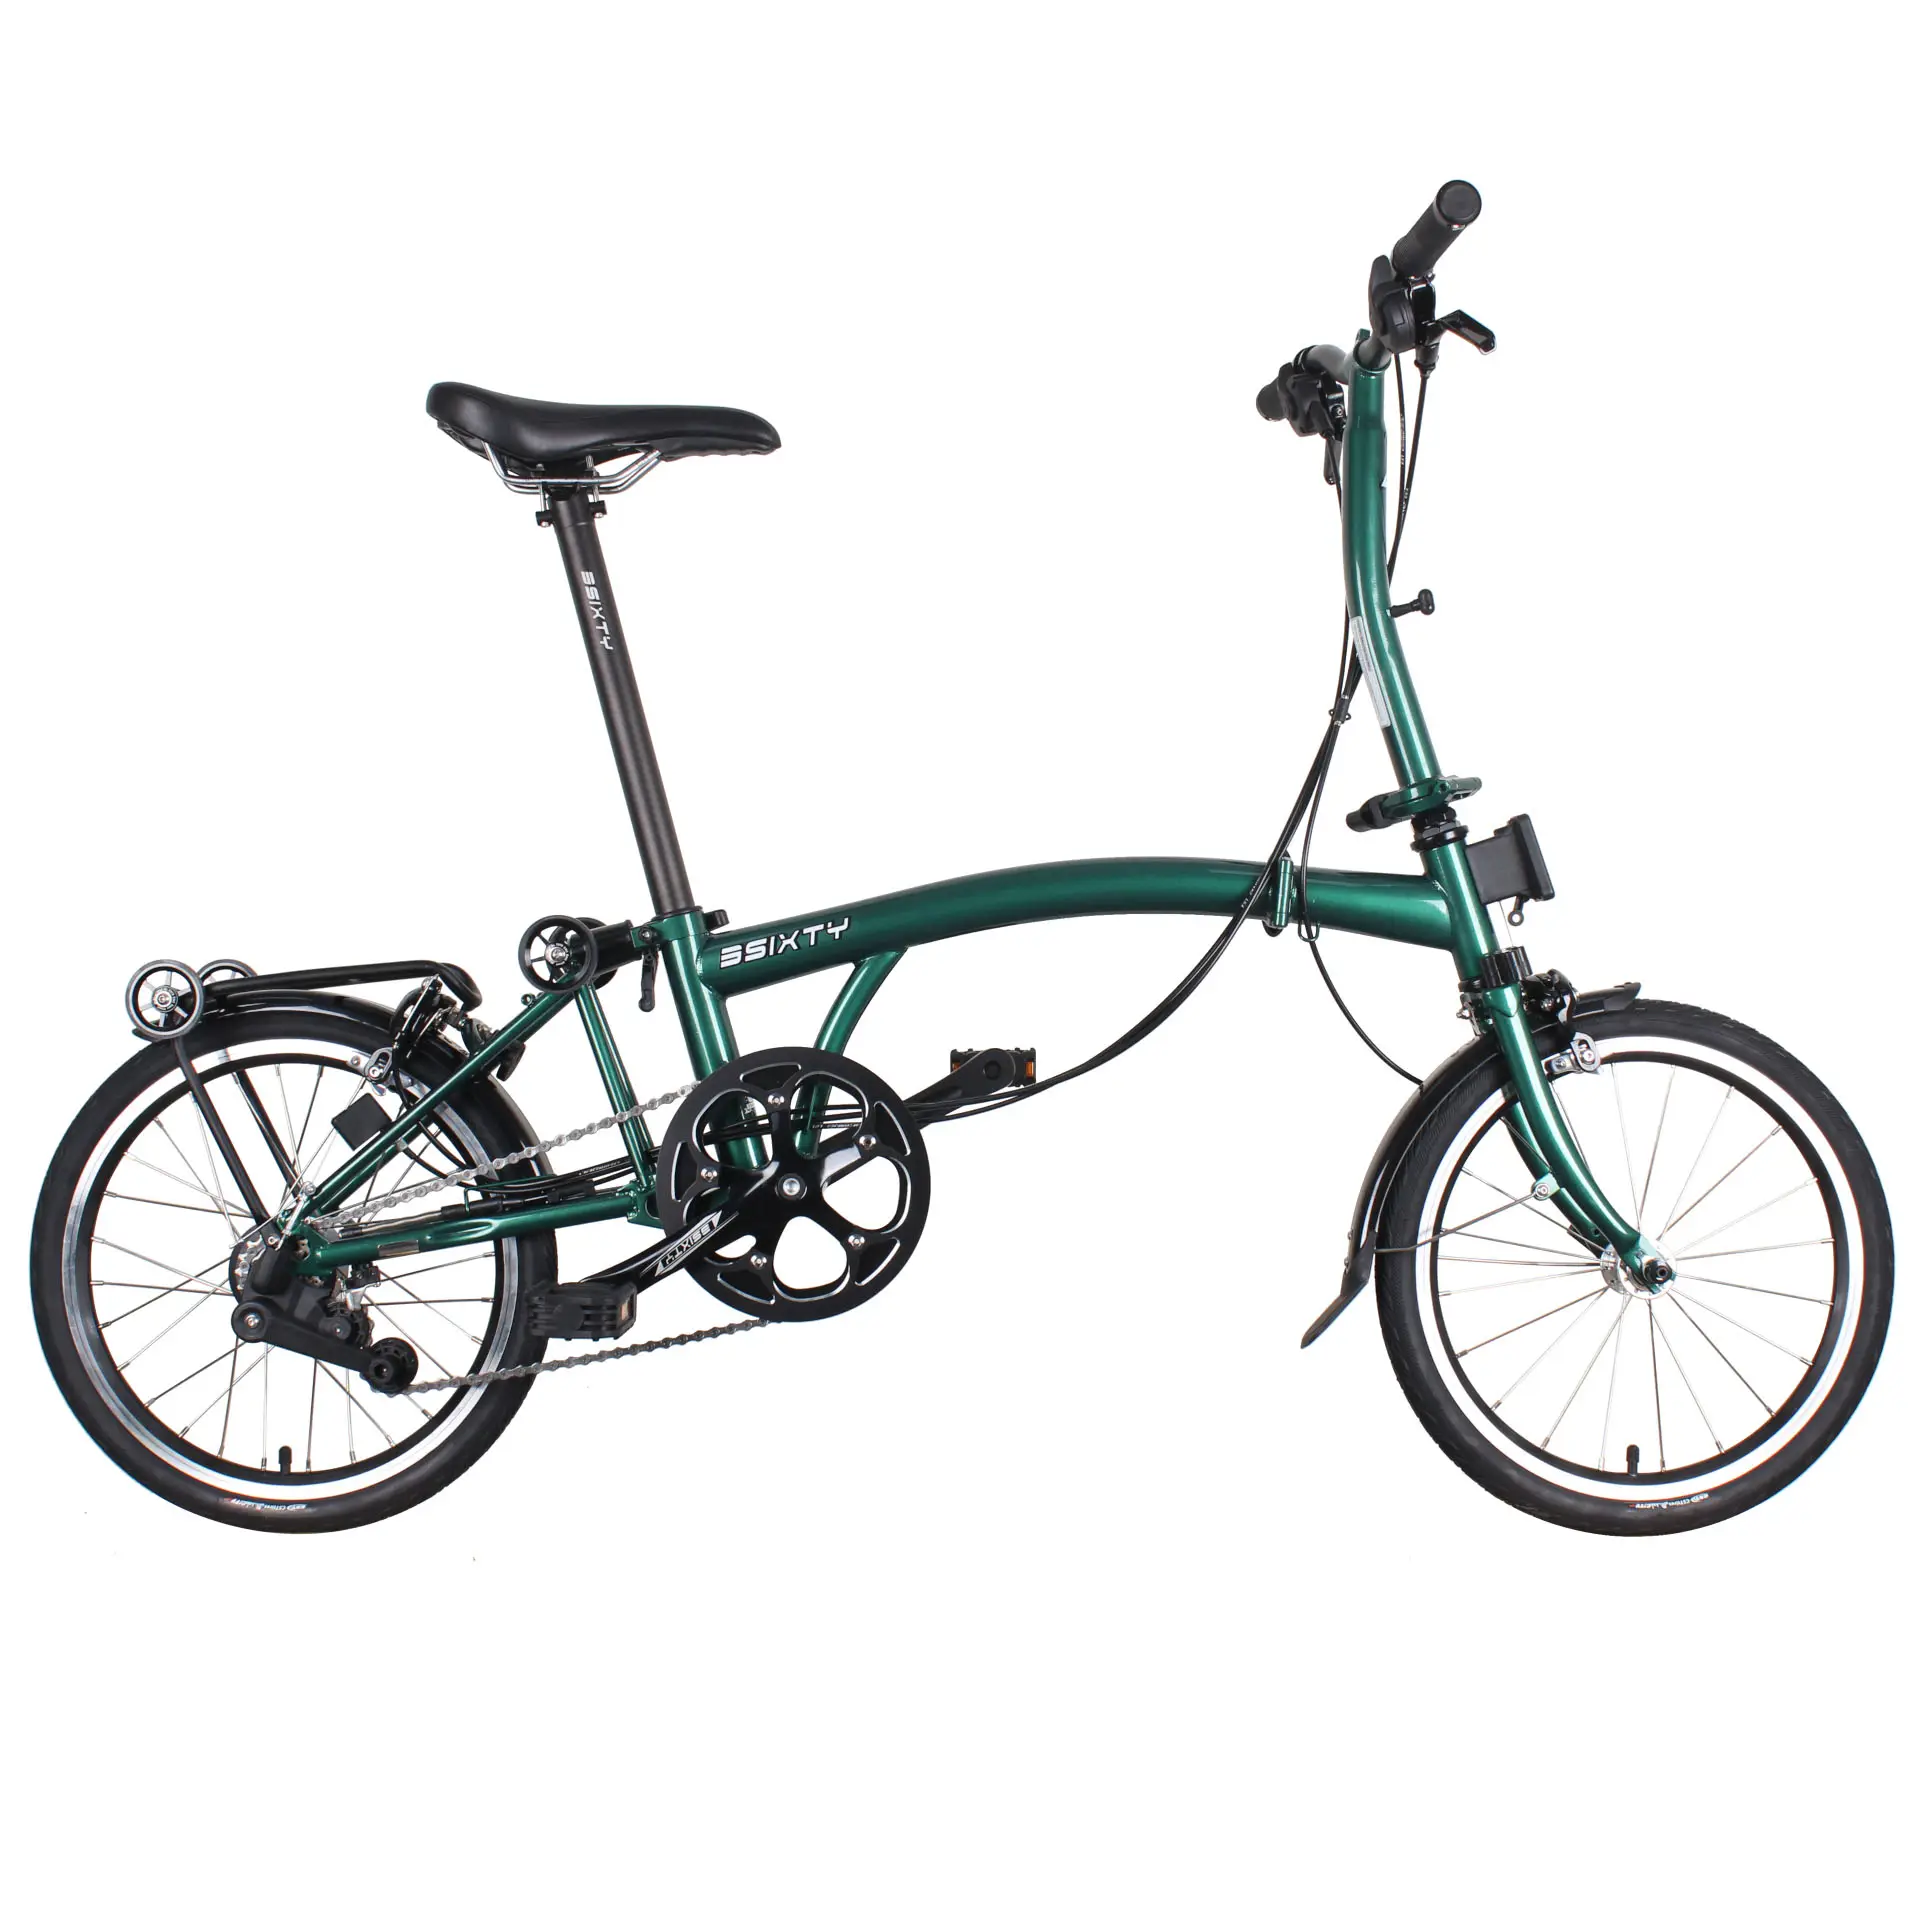 3Sixty Folding Bike 16 inch Folding Bicycle 6 speed Y-Bar S6 Post Green